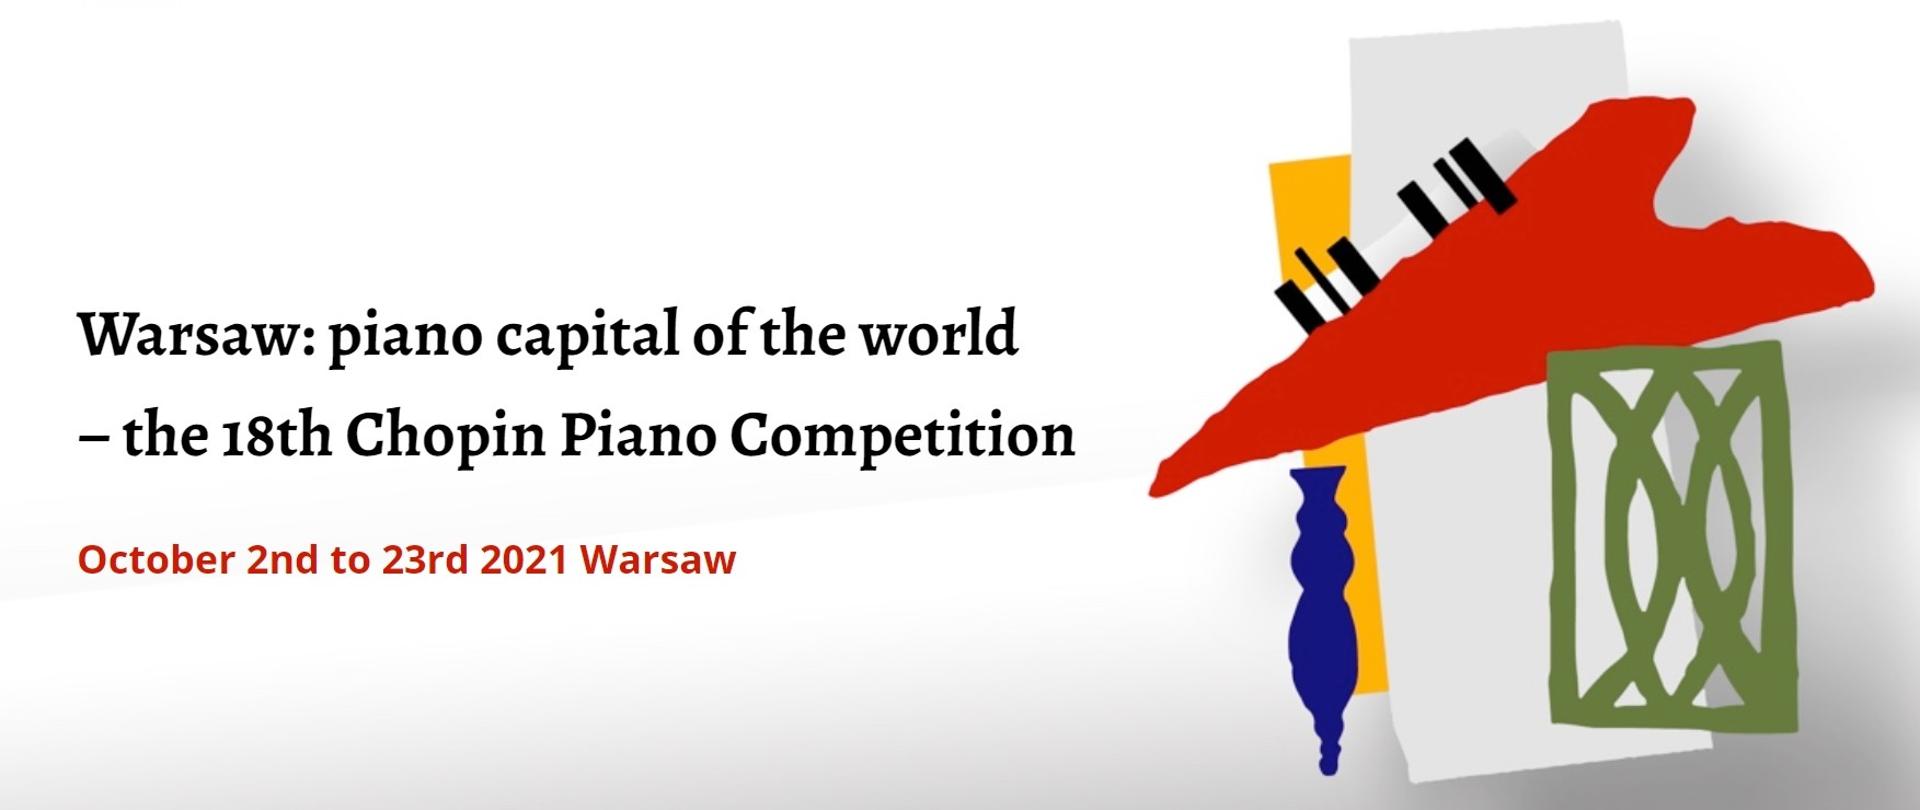 Caducado enfermedad Mansedumbre The 18th International Chopin Piano Competition - Poland in Australia -  Gov.pl website